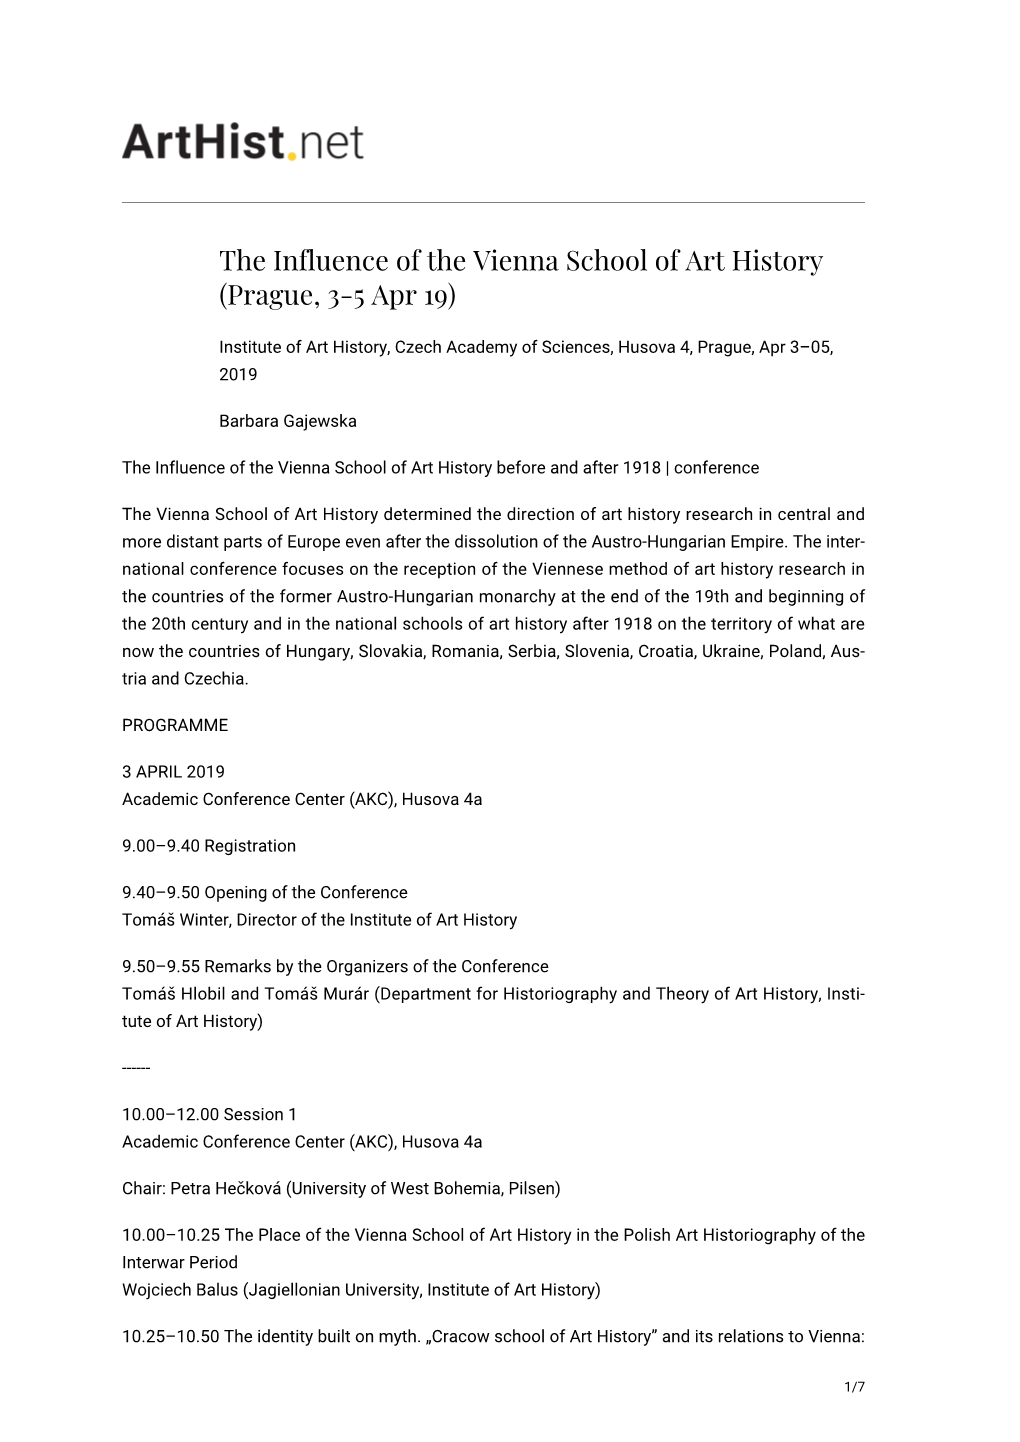 The Influence of the Vienna School of Art History (Prague, 3-5 Apr 19)